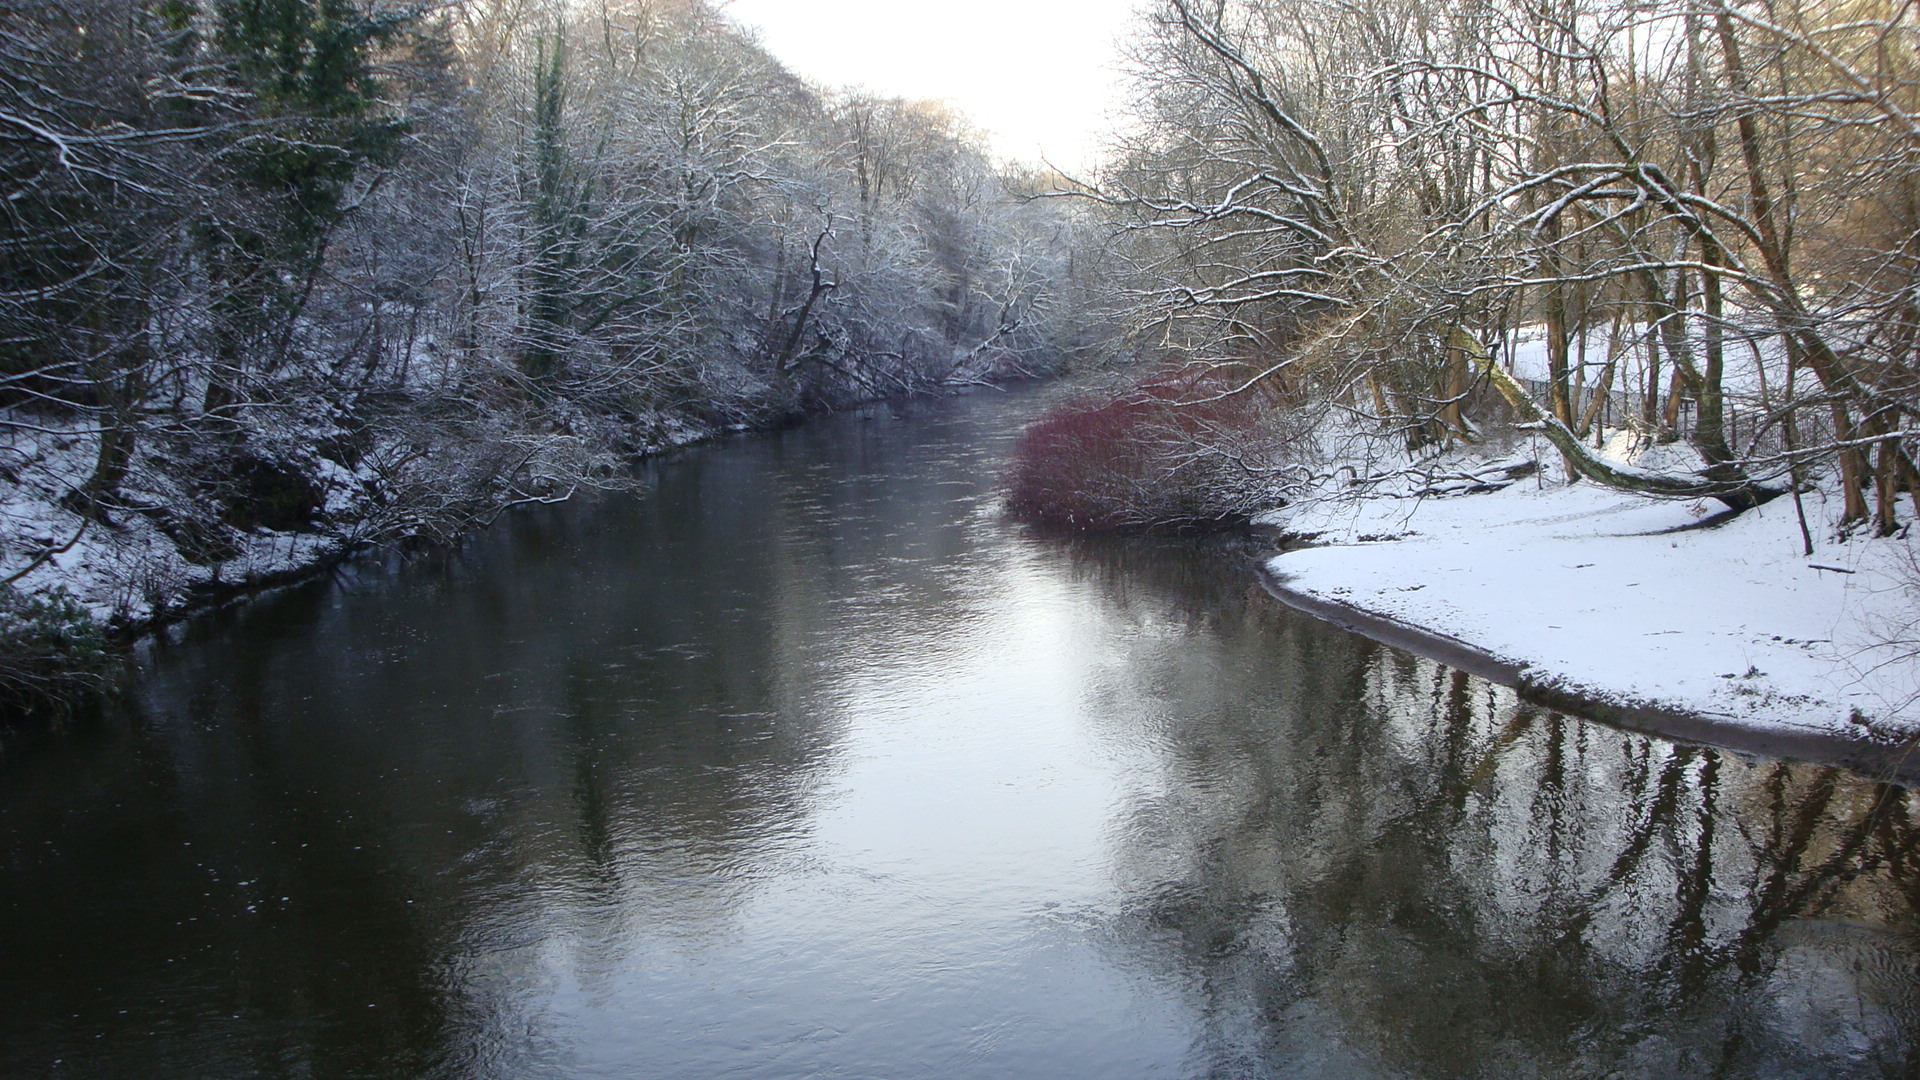 The Kelvin river